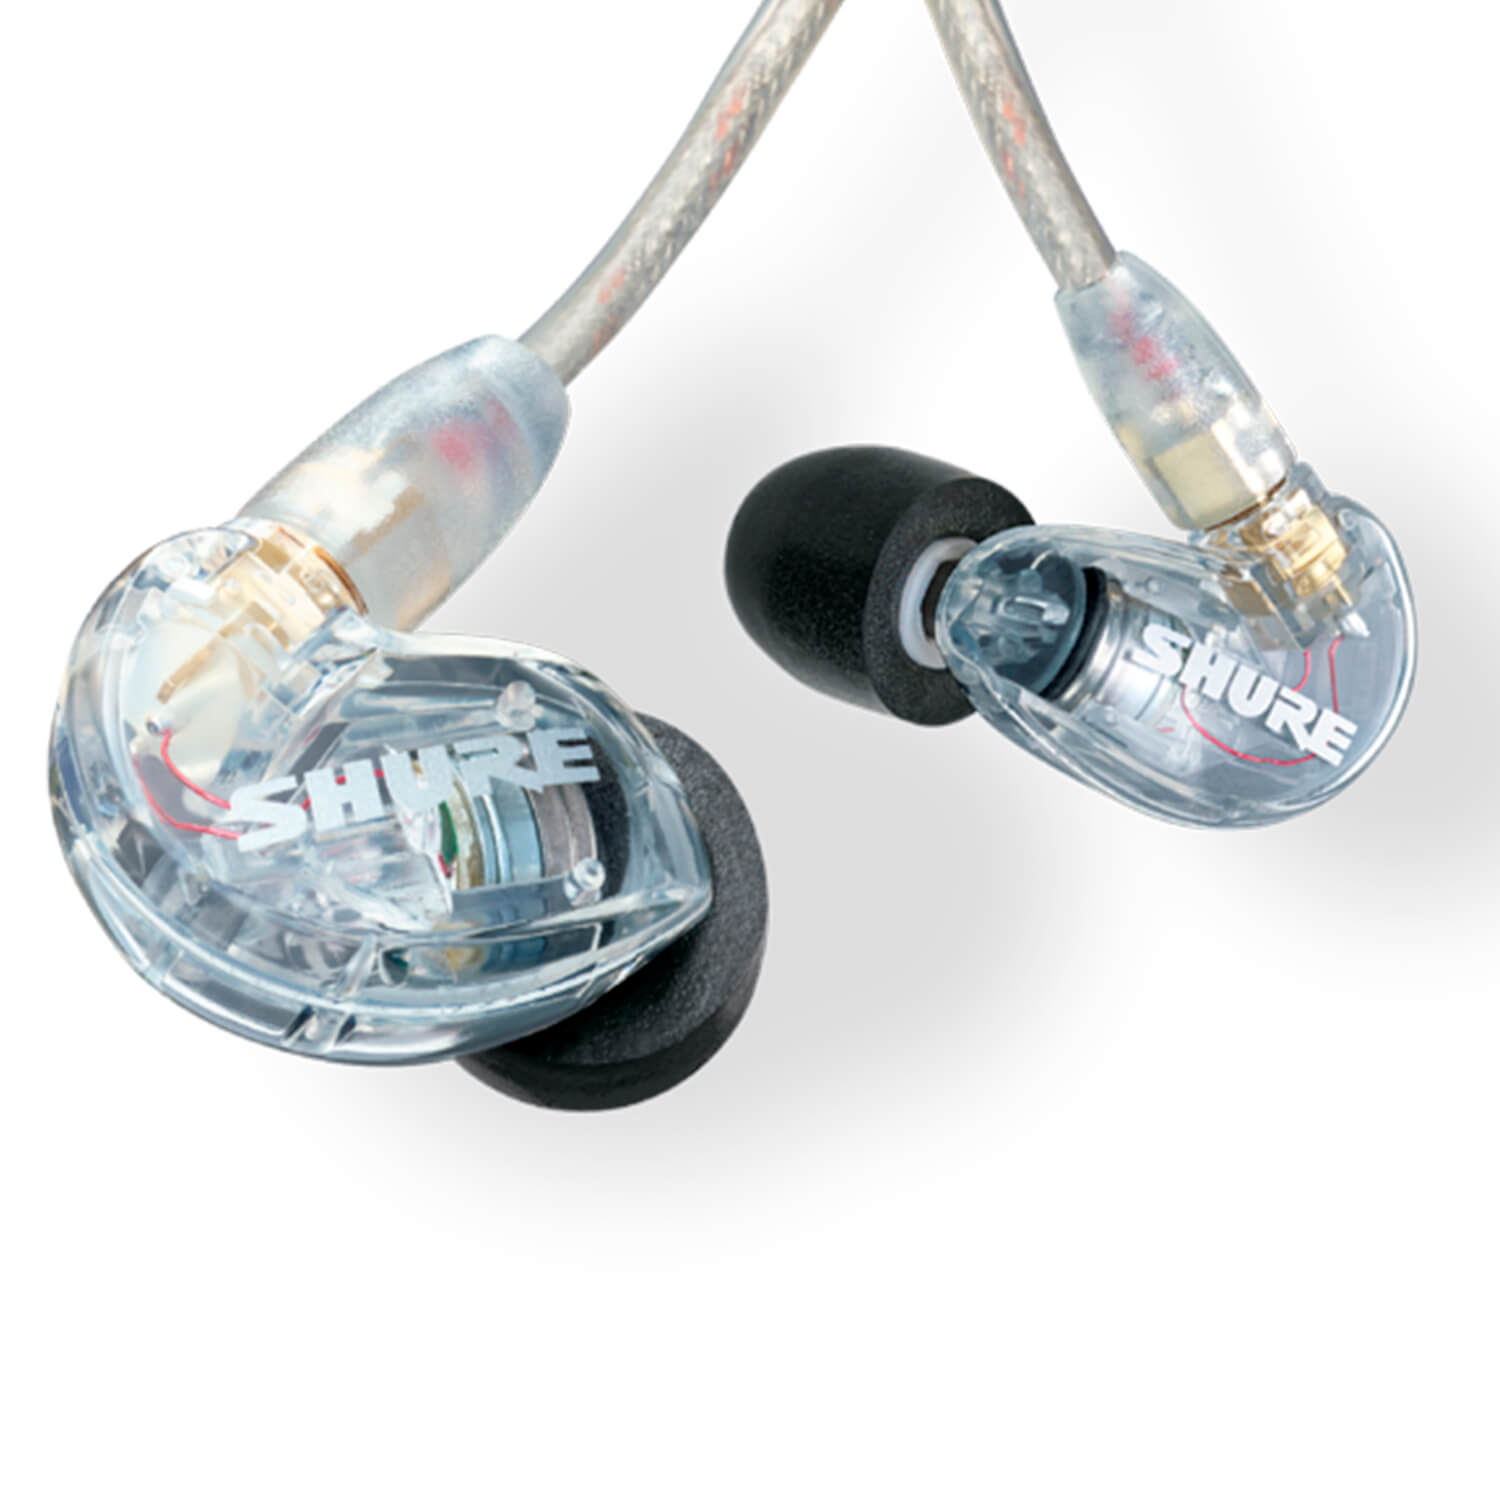 🧇 Shure SE215-CL Audifonos In-Ear Profesionales - Audio Pro Perú